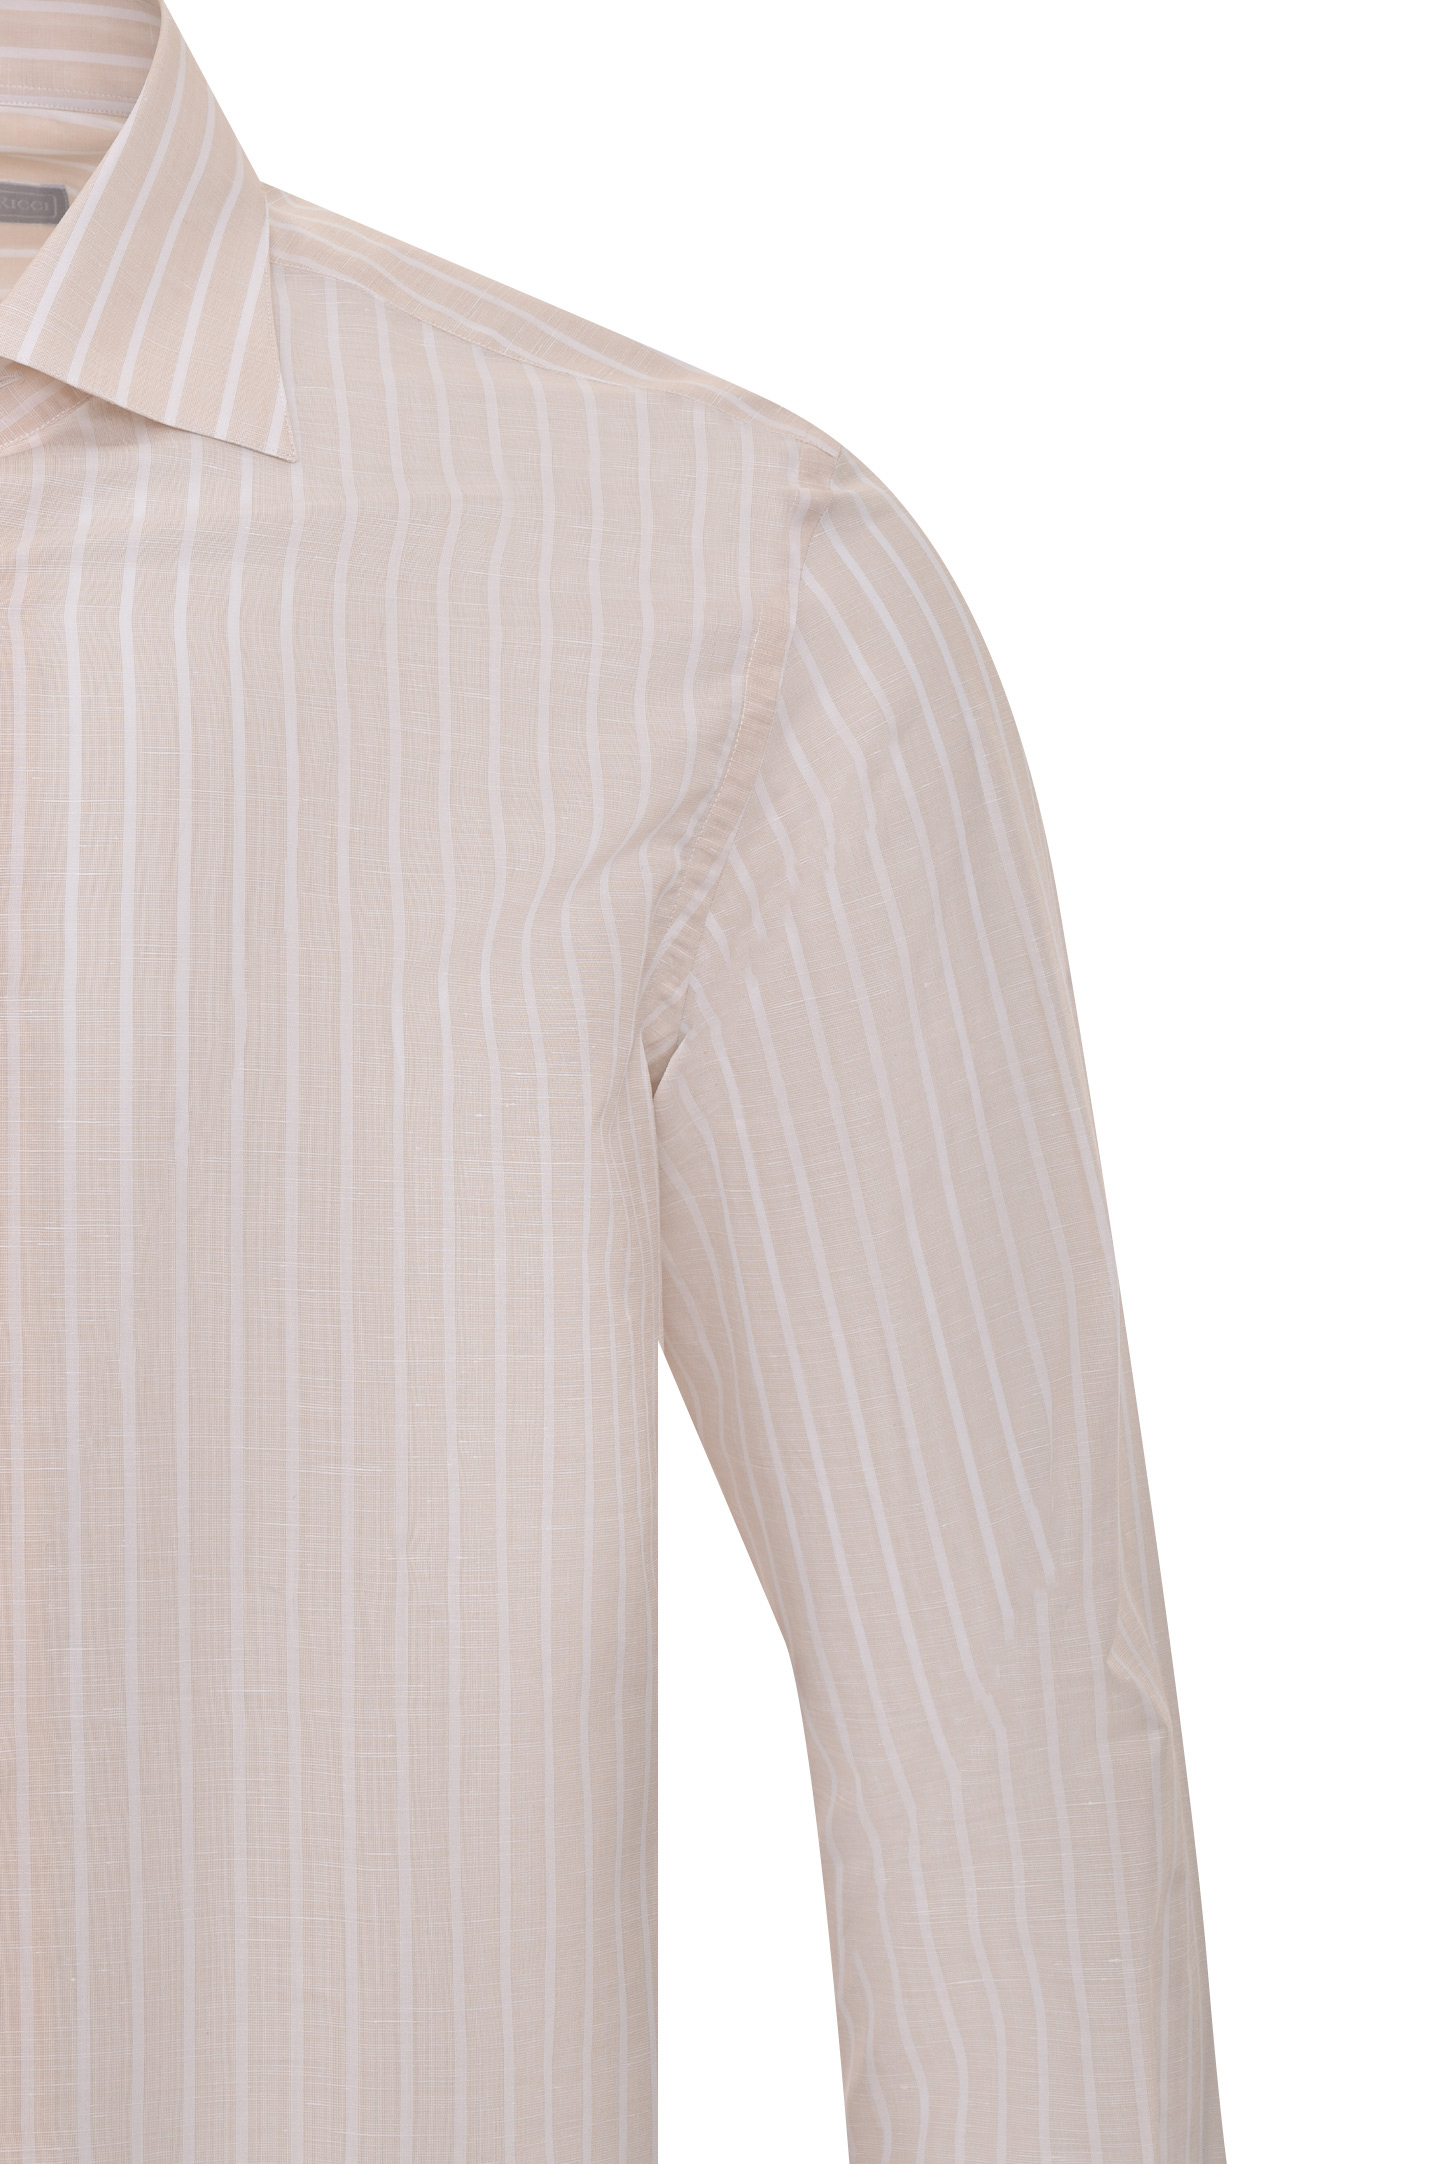 Рубашка STEFANO RICCI MC003685 R2359, цвет: Бежевый, Мужской